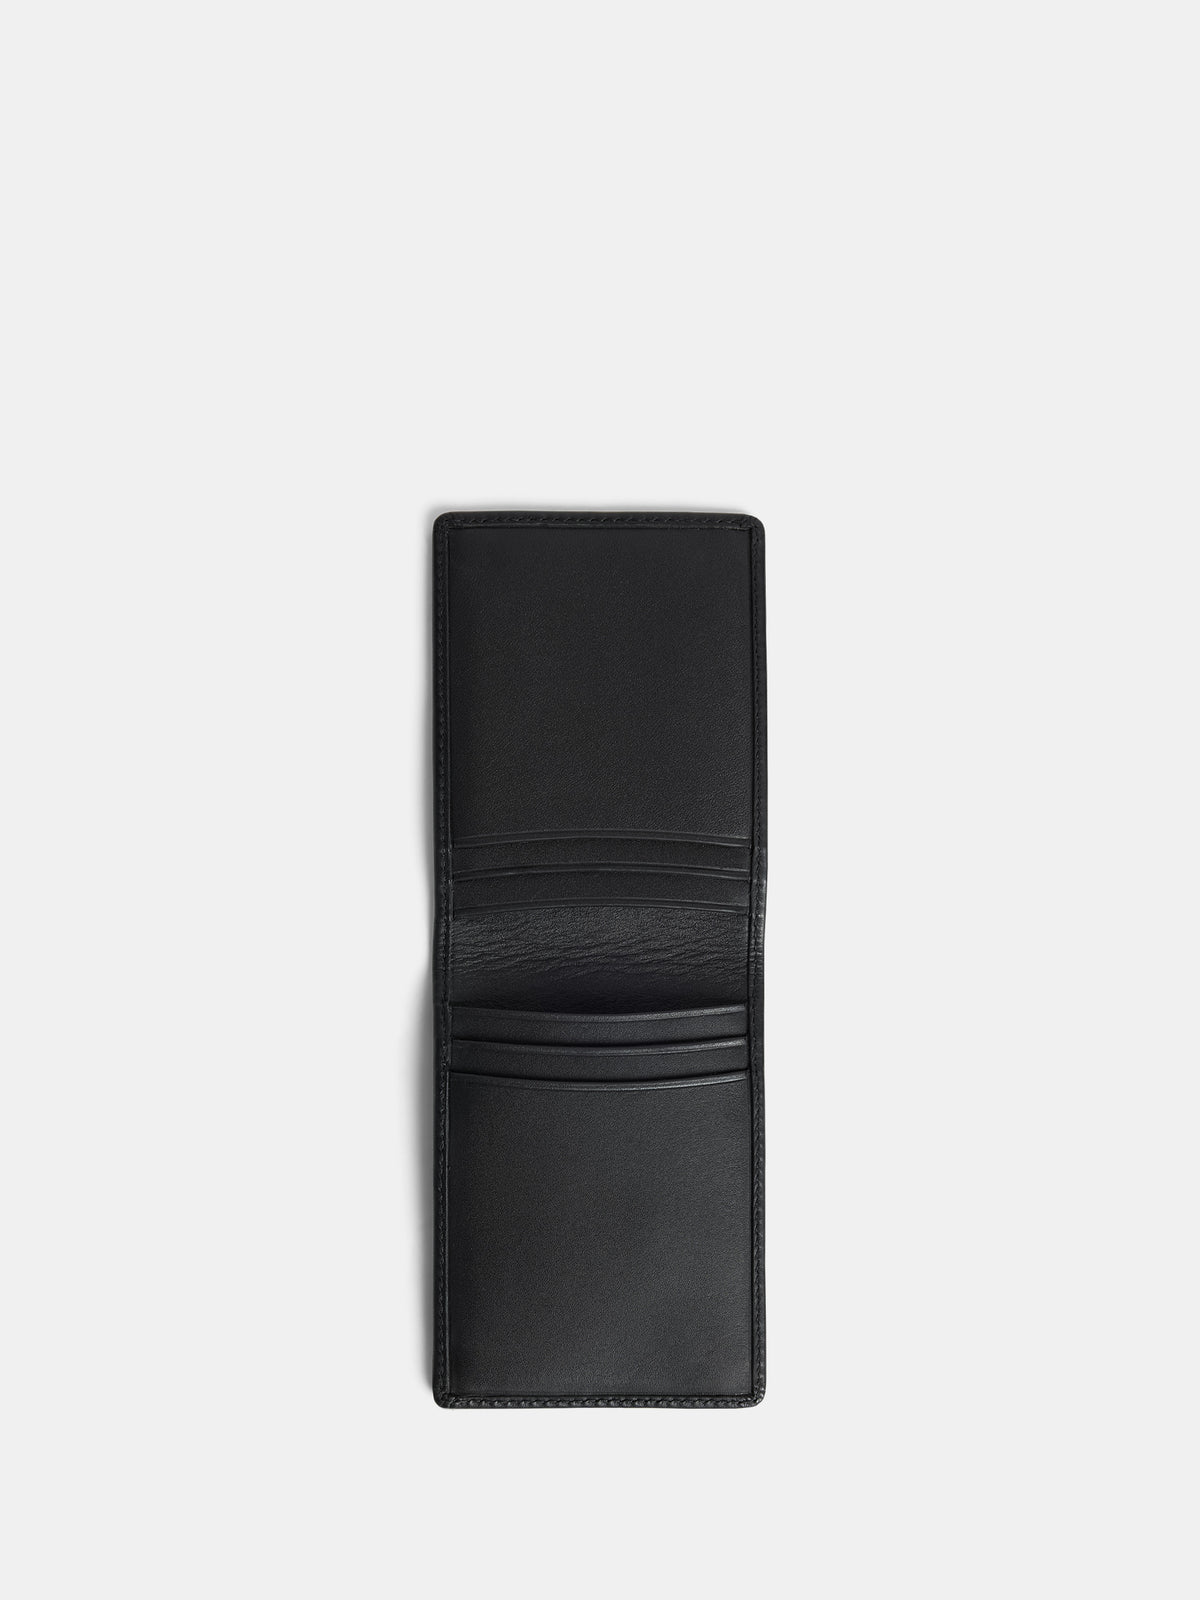 Flip Wallet / Black